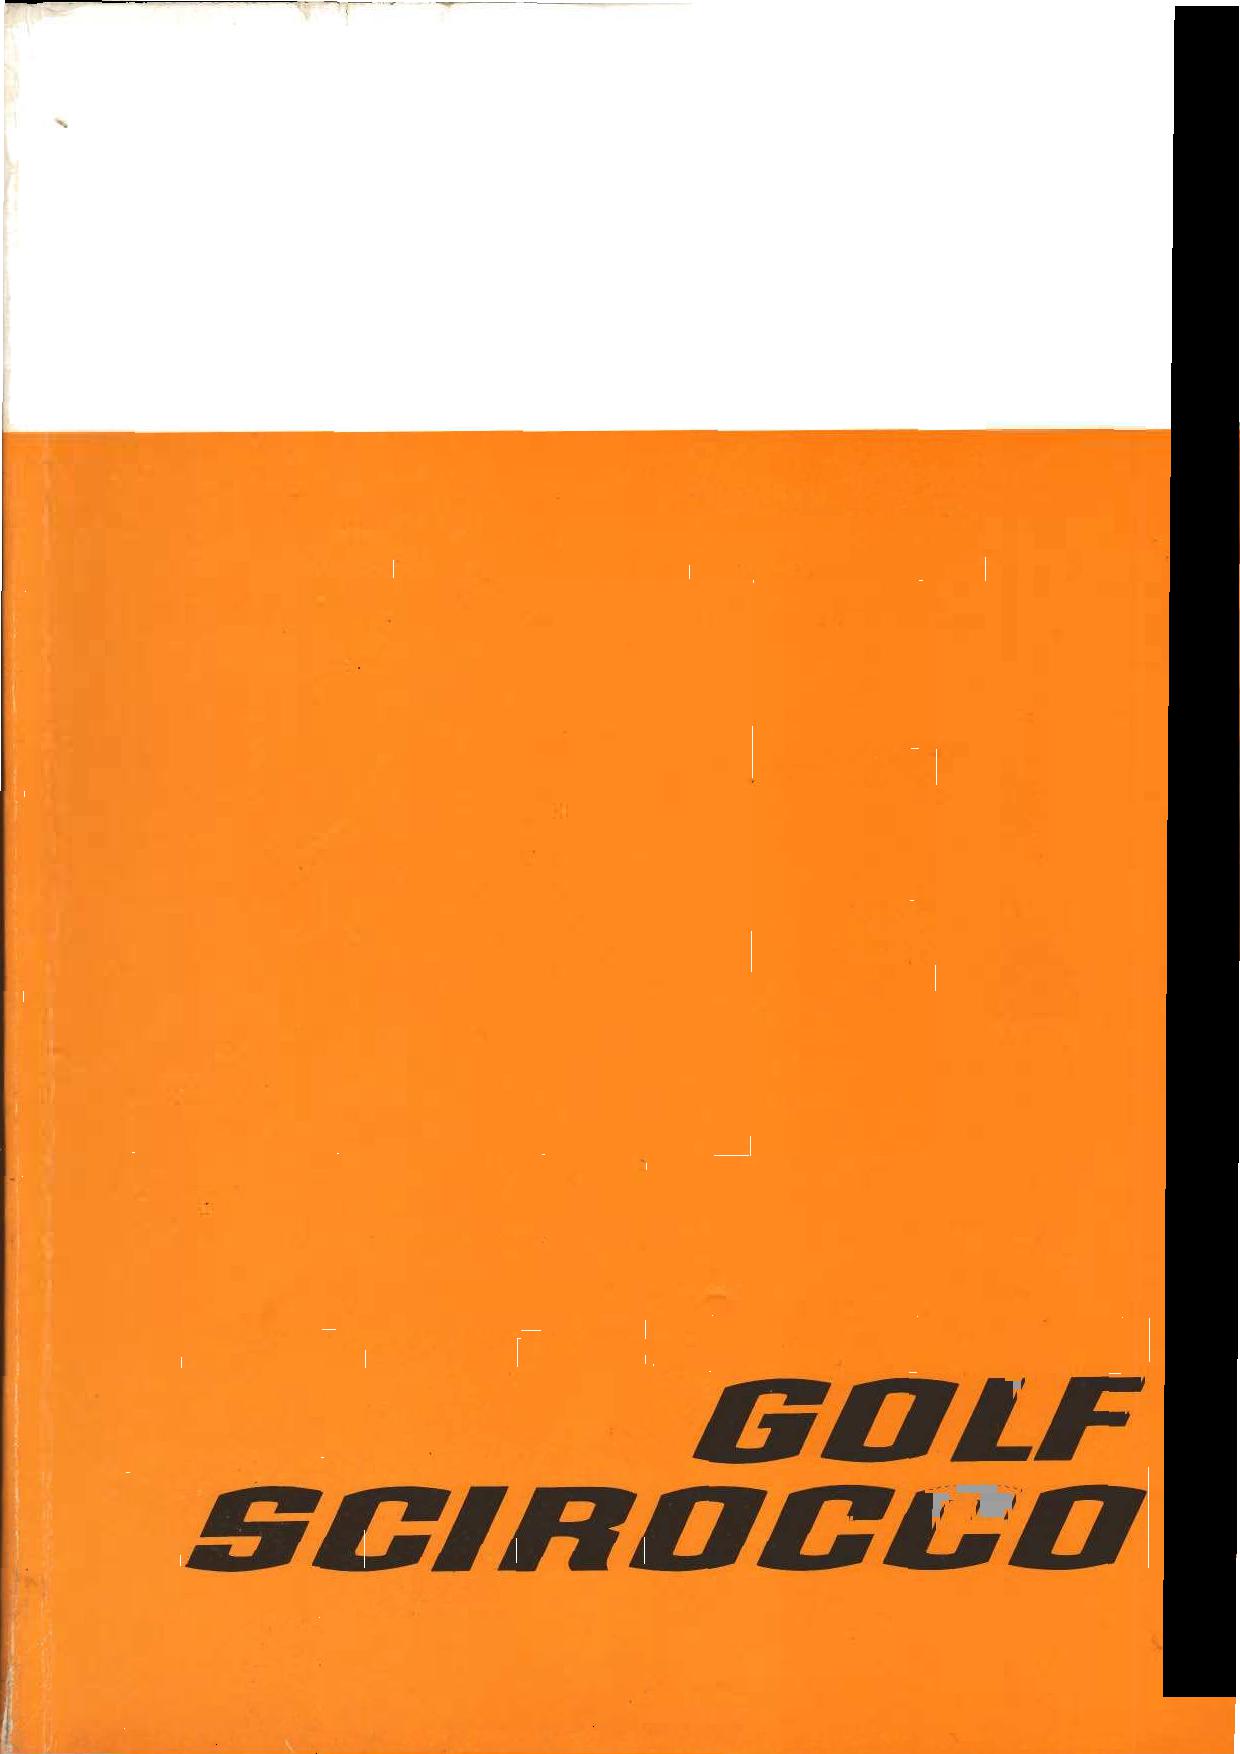 Golf mk1 cabrio - RLF_Golf_Scirocco_1.jpg